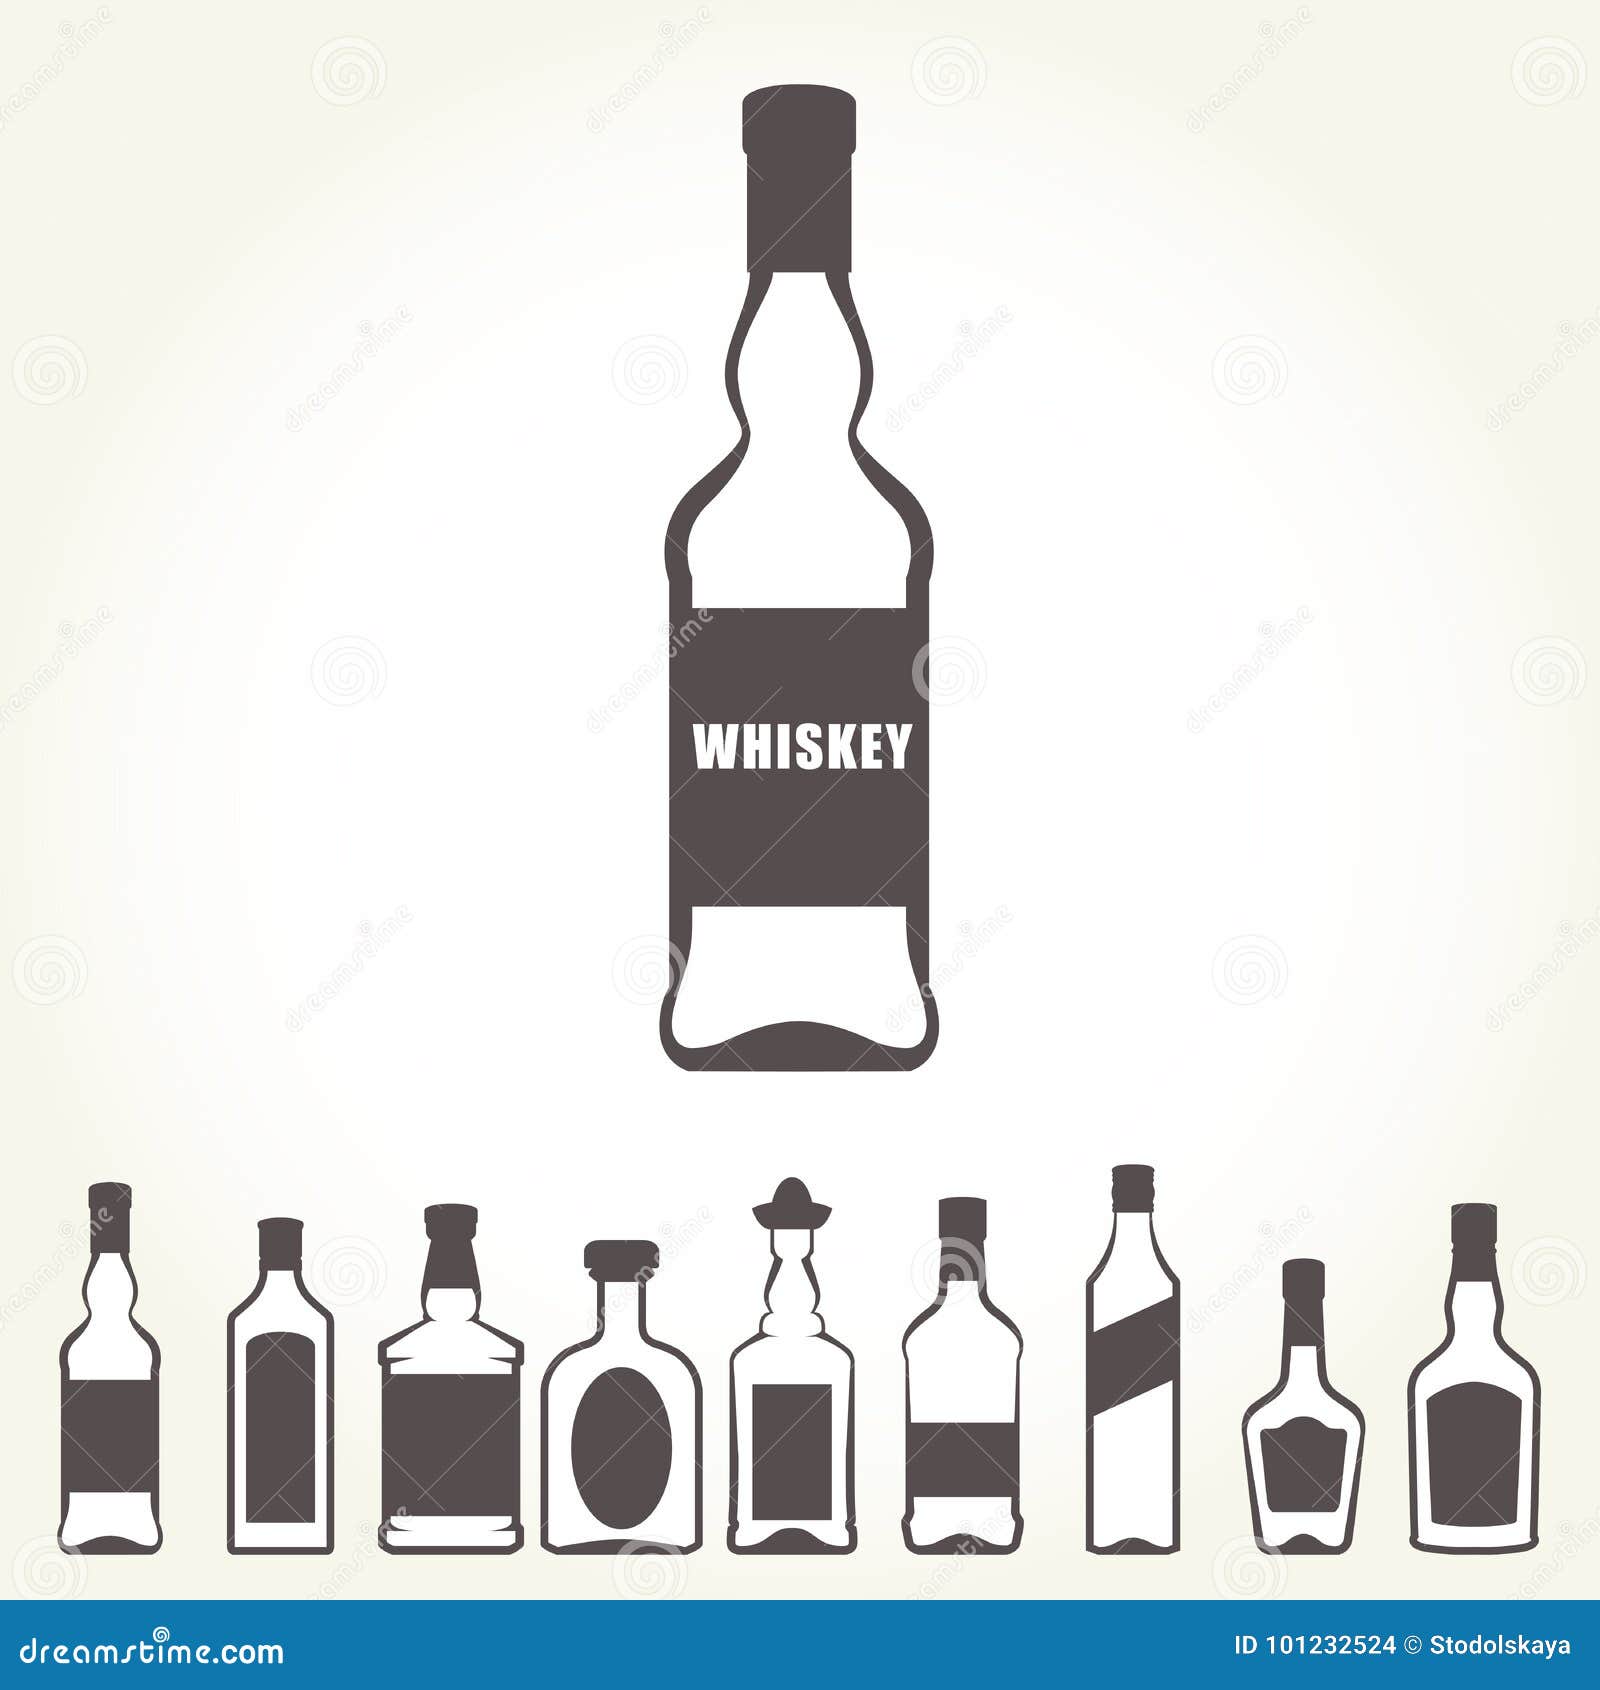 row of icons of alcohol bottles - booze set